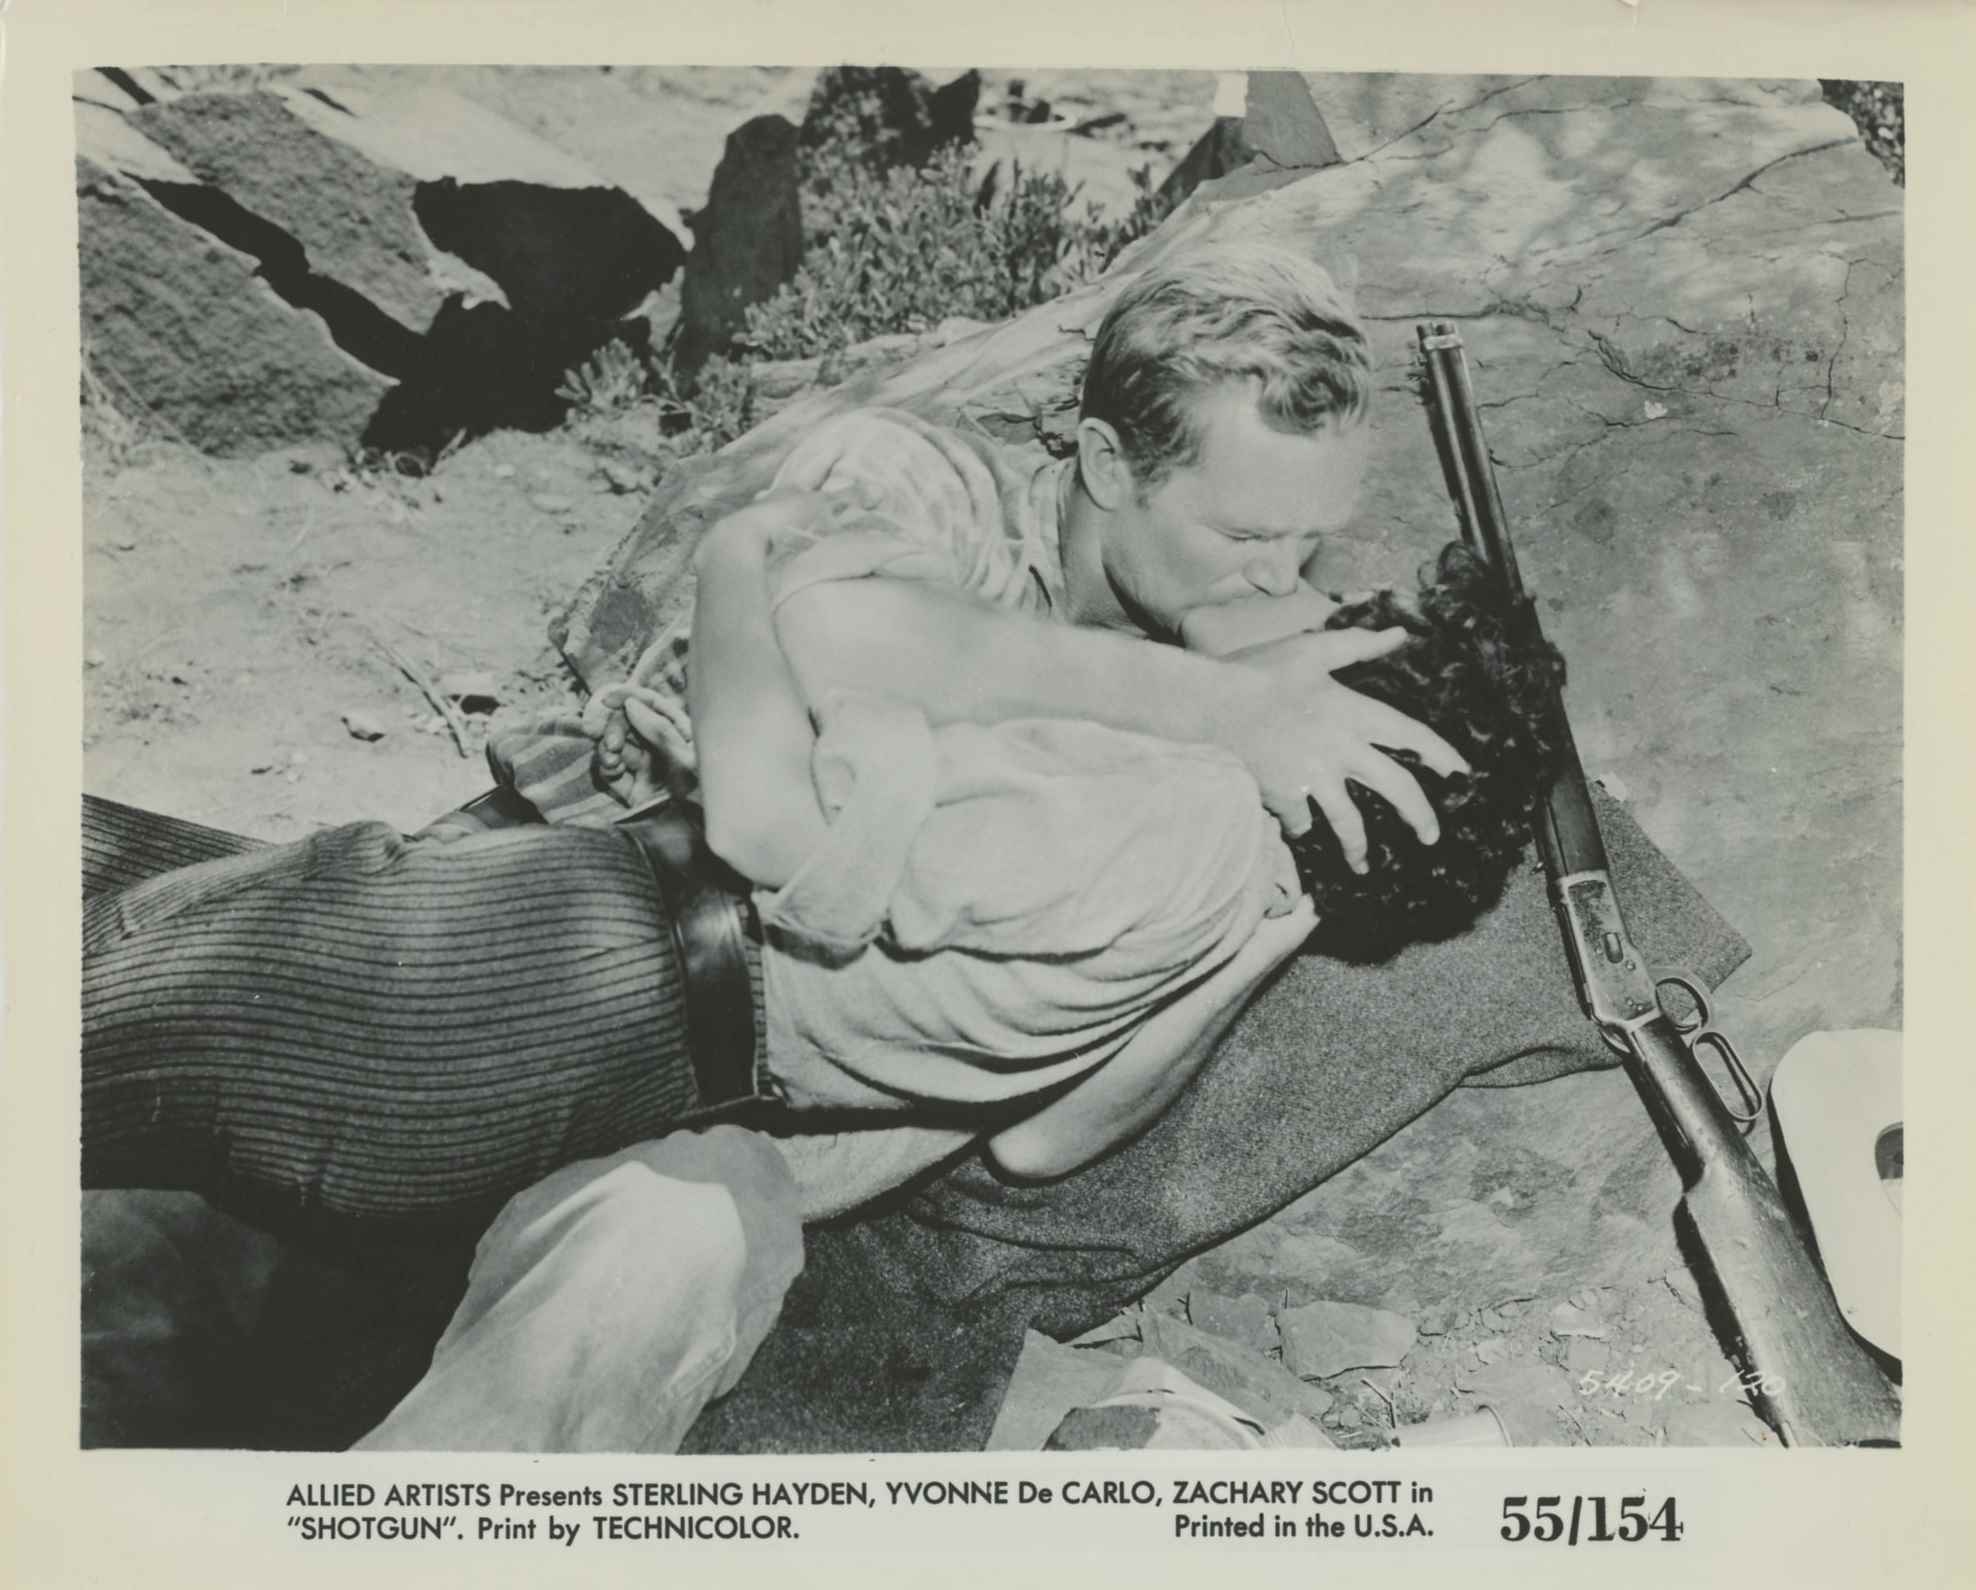 Shotgun (1955) Screenshot 3 